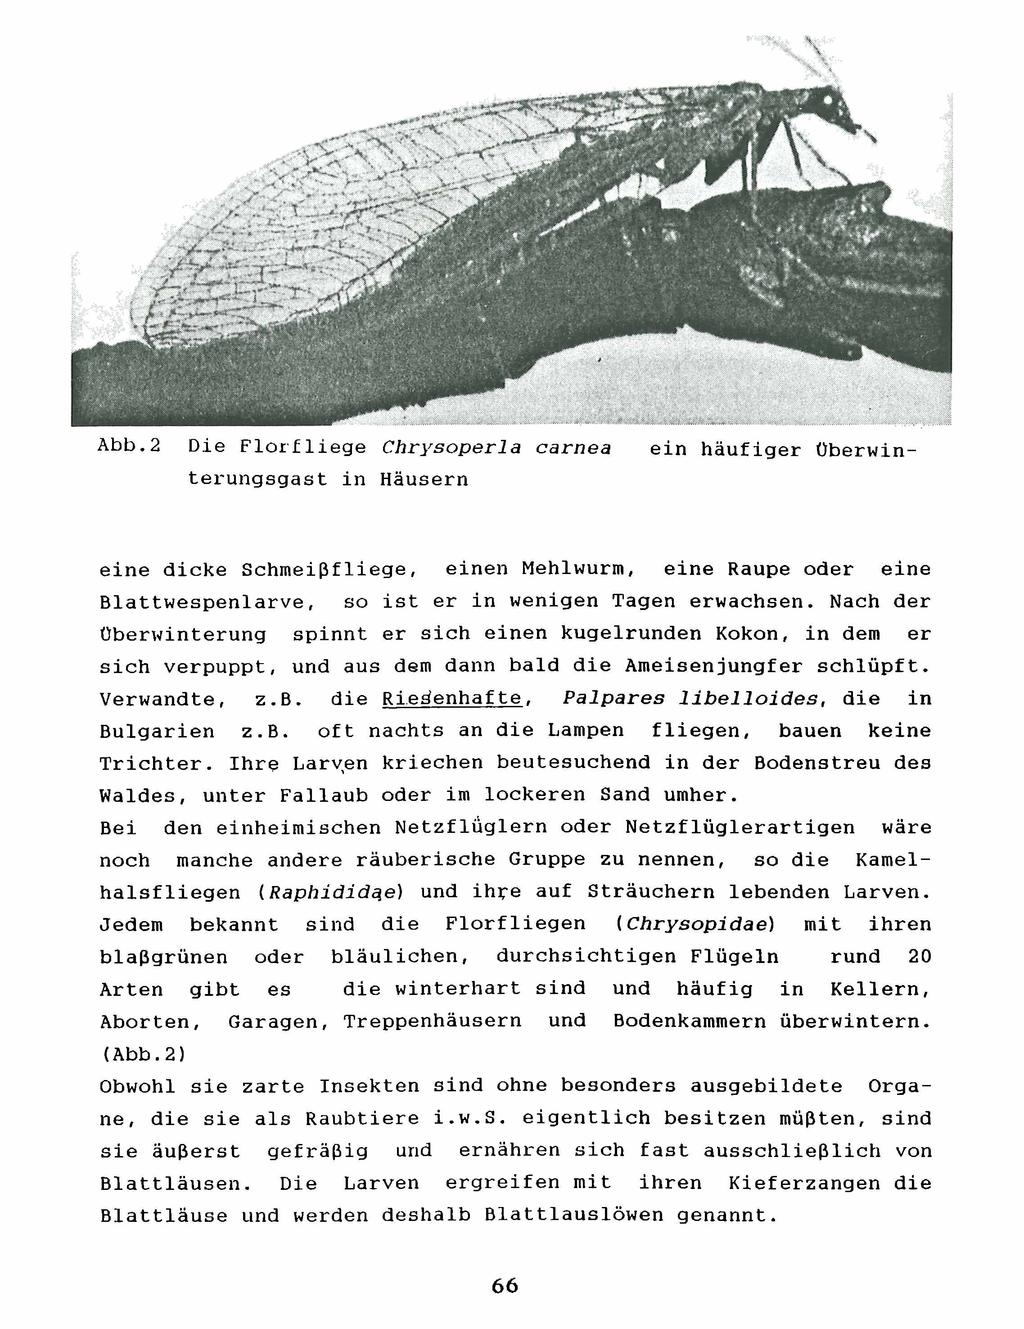 Kreis Nürnberger Entomologen; download unter www.biologiezentrum.at Abb.